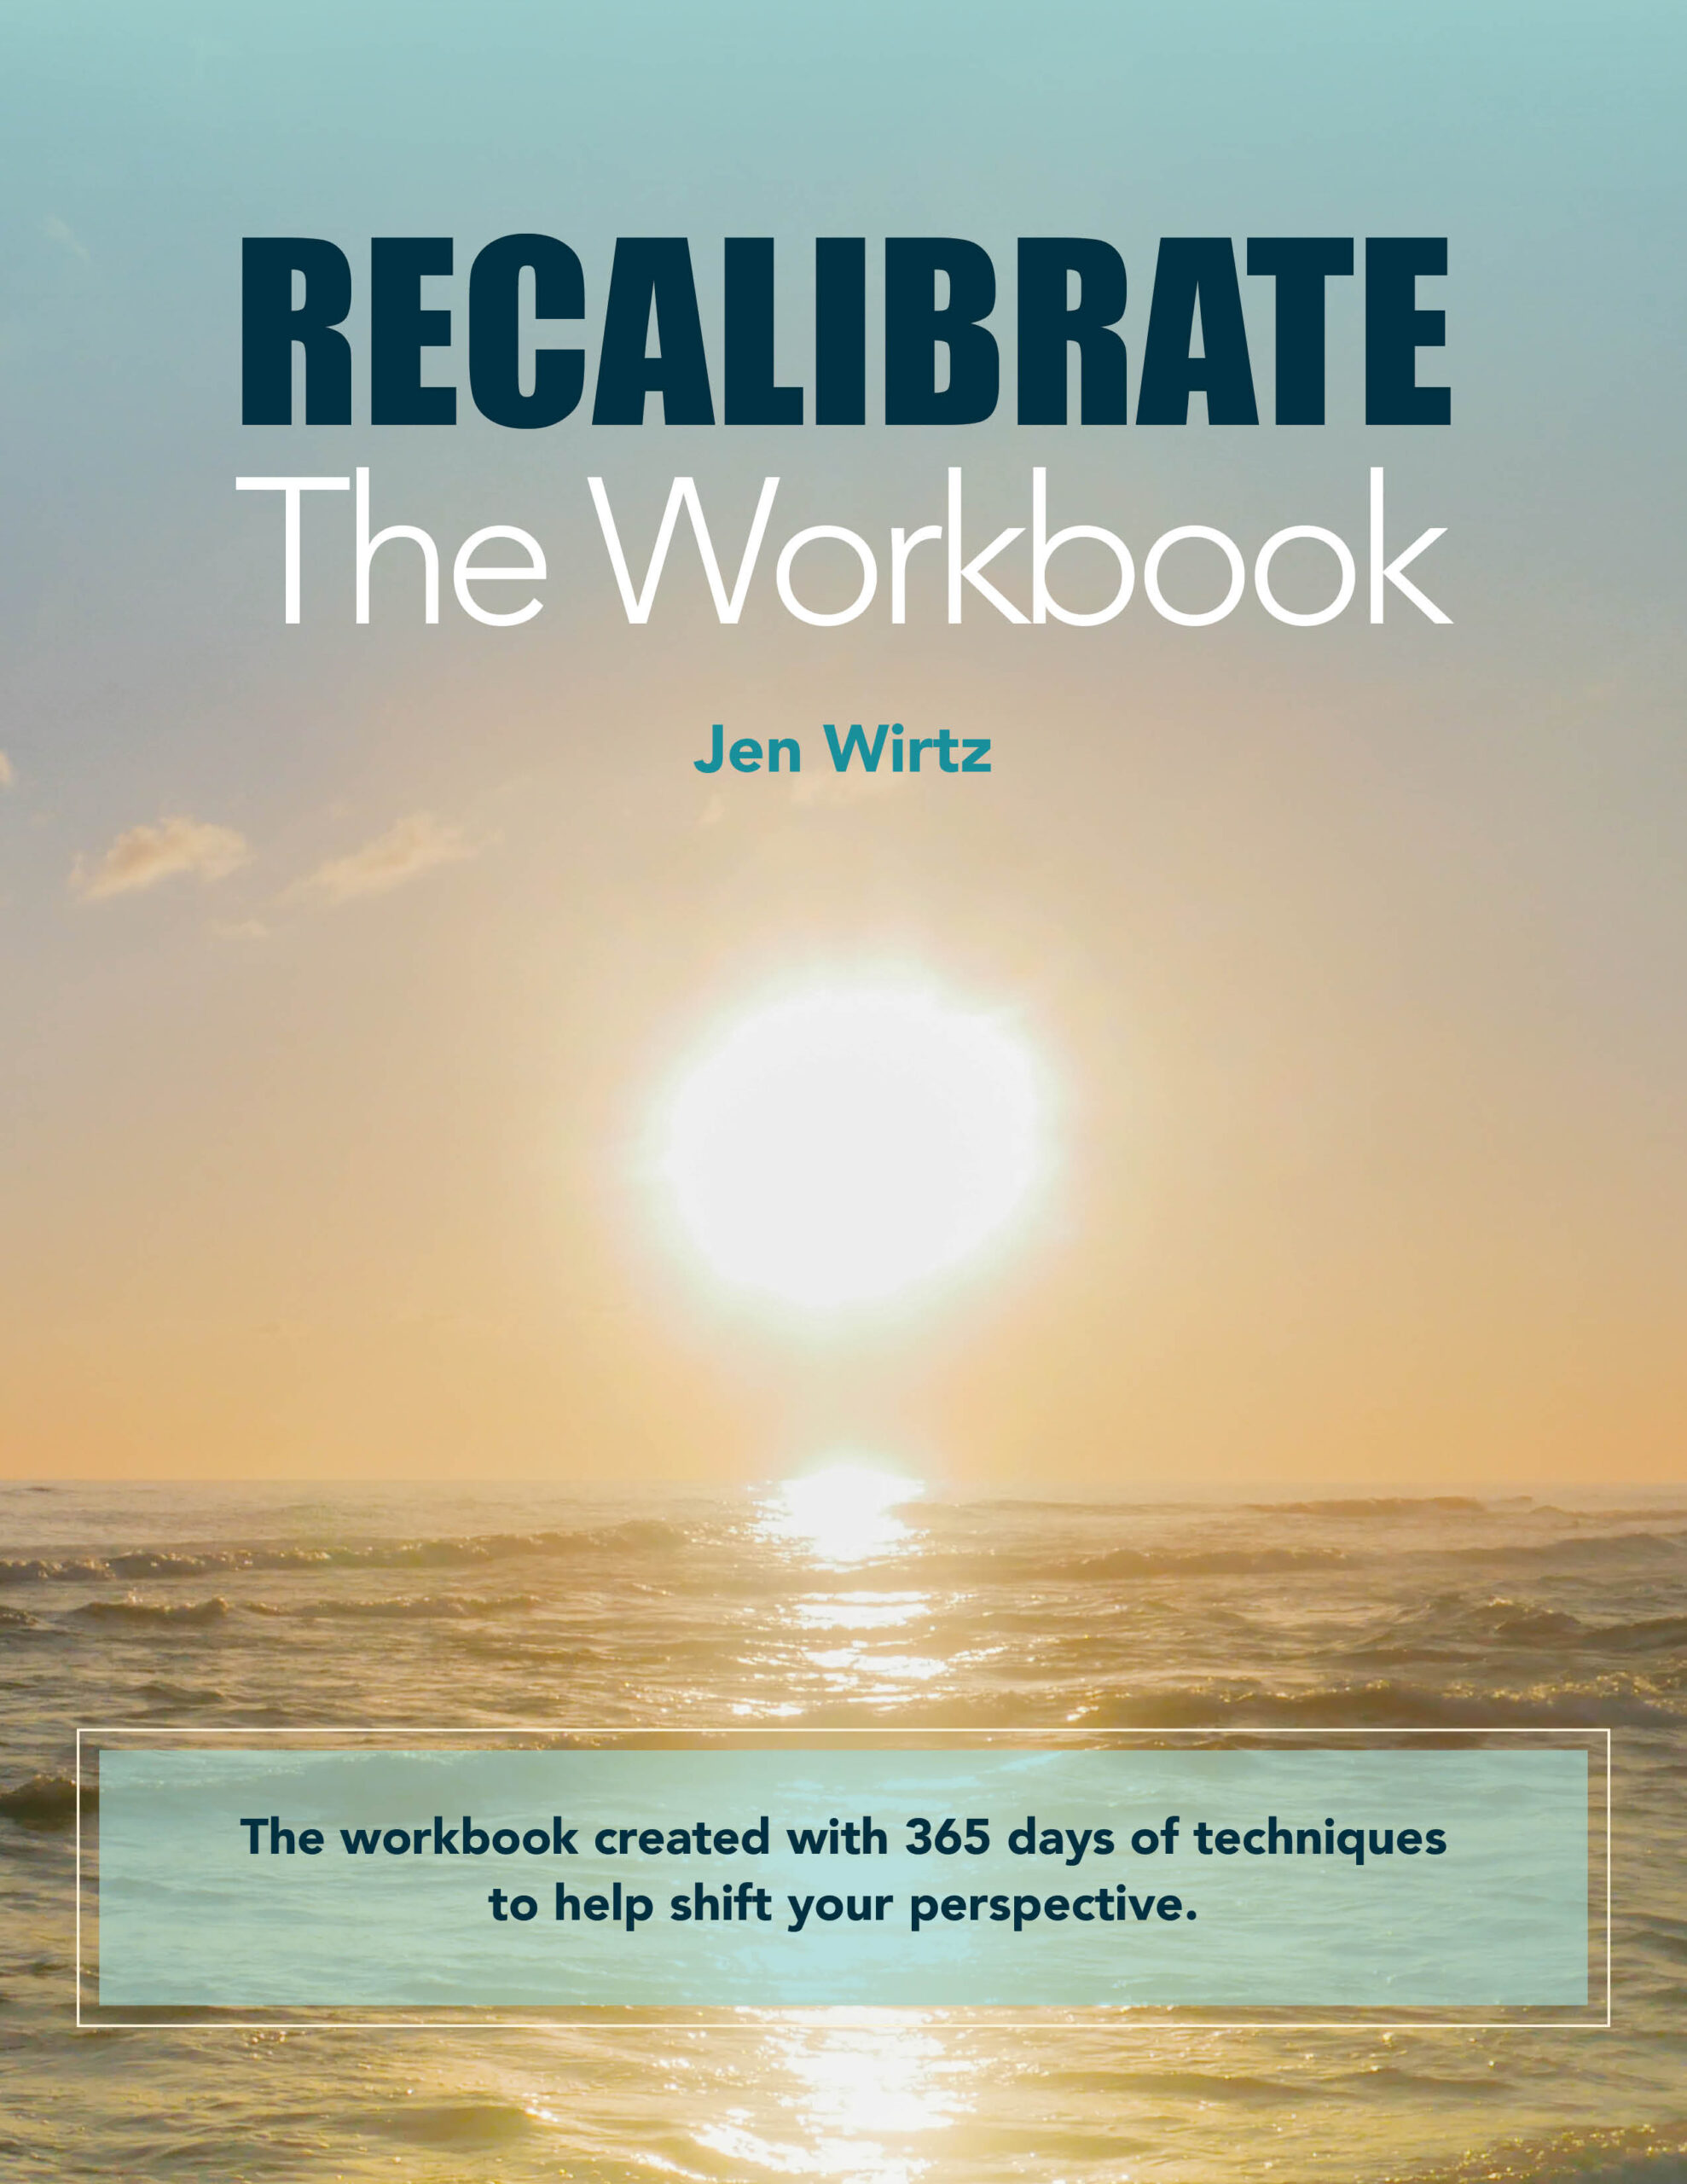 Recalibrate workbook